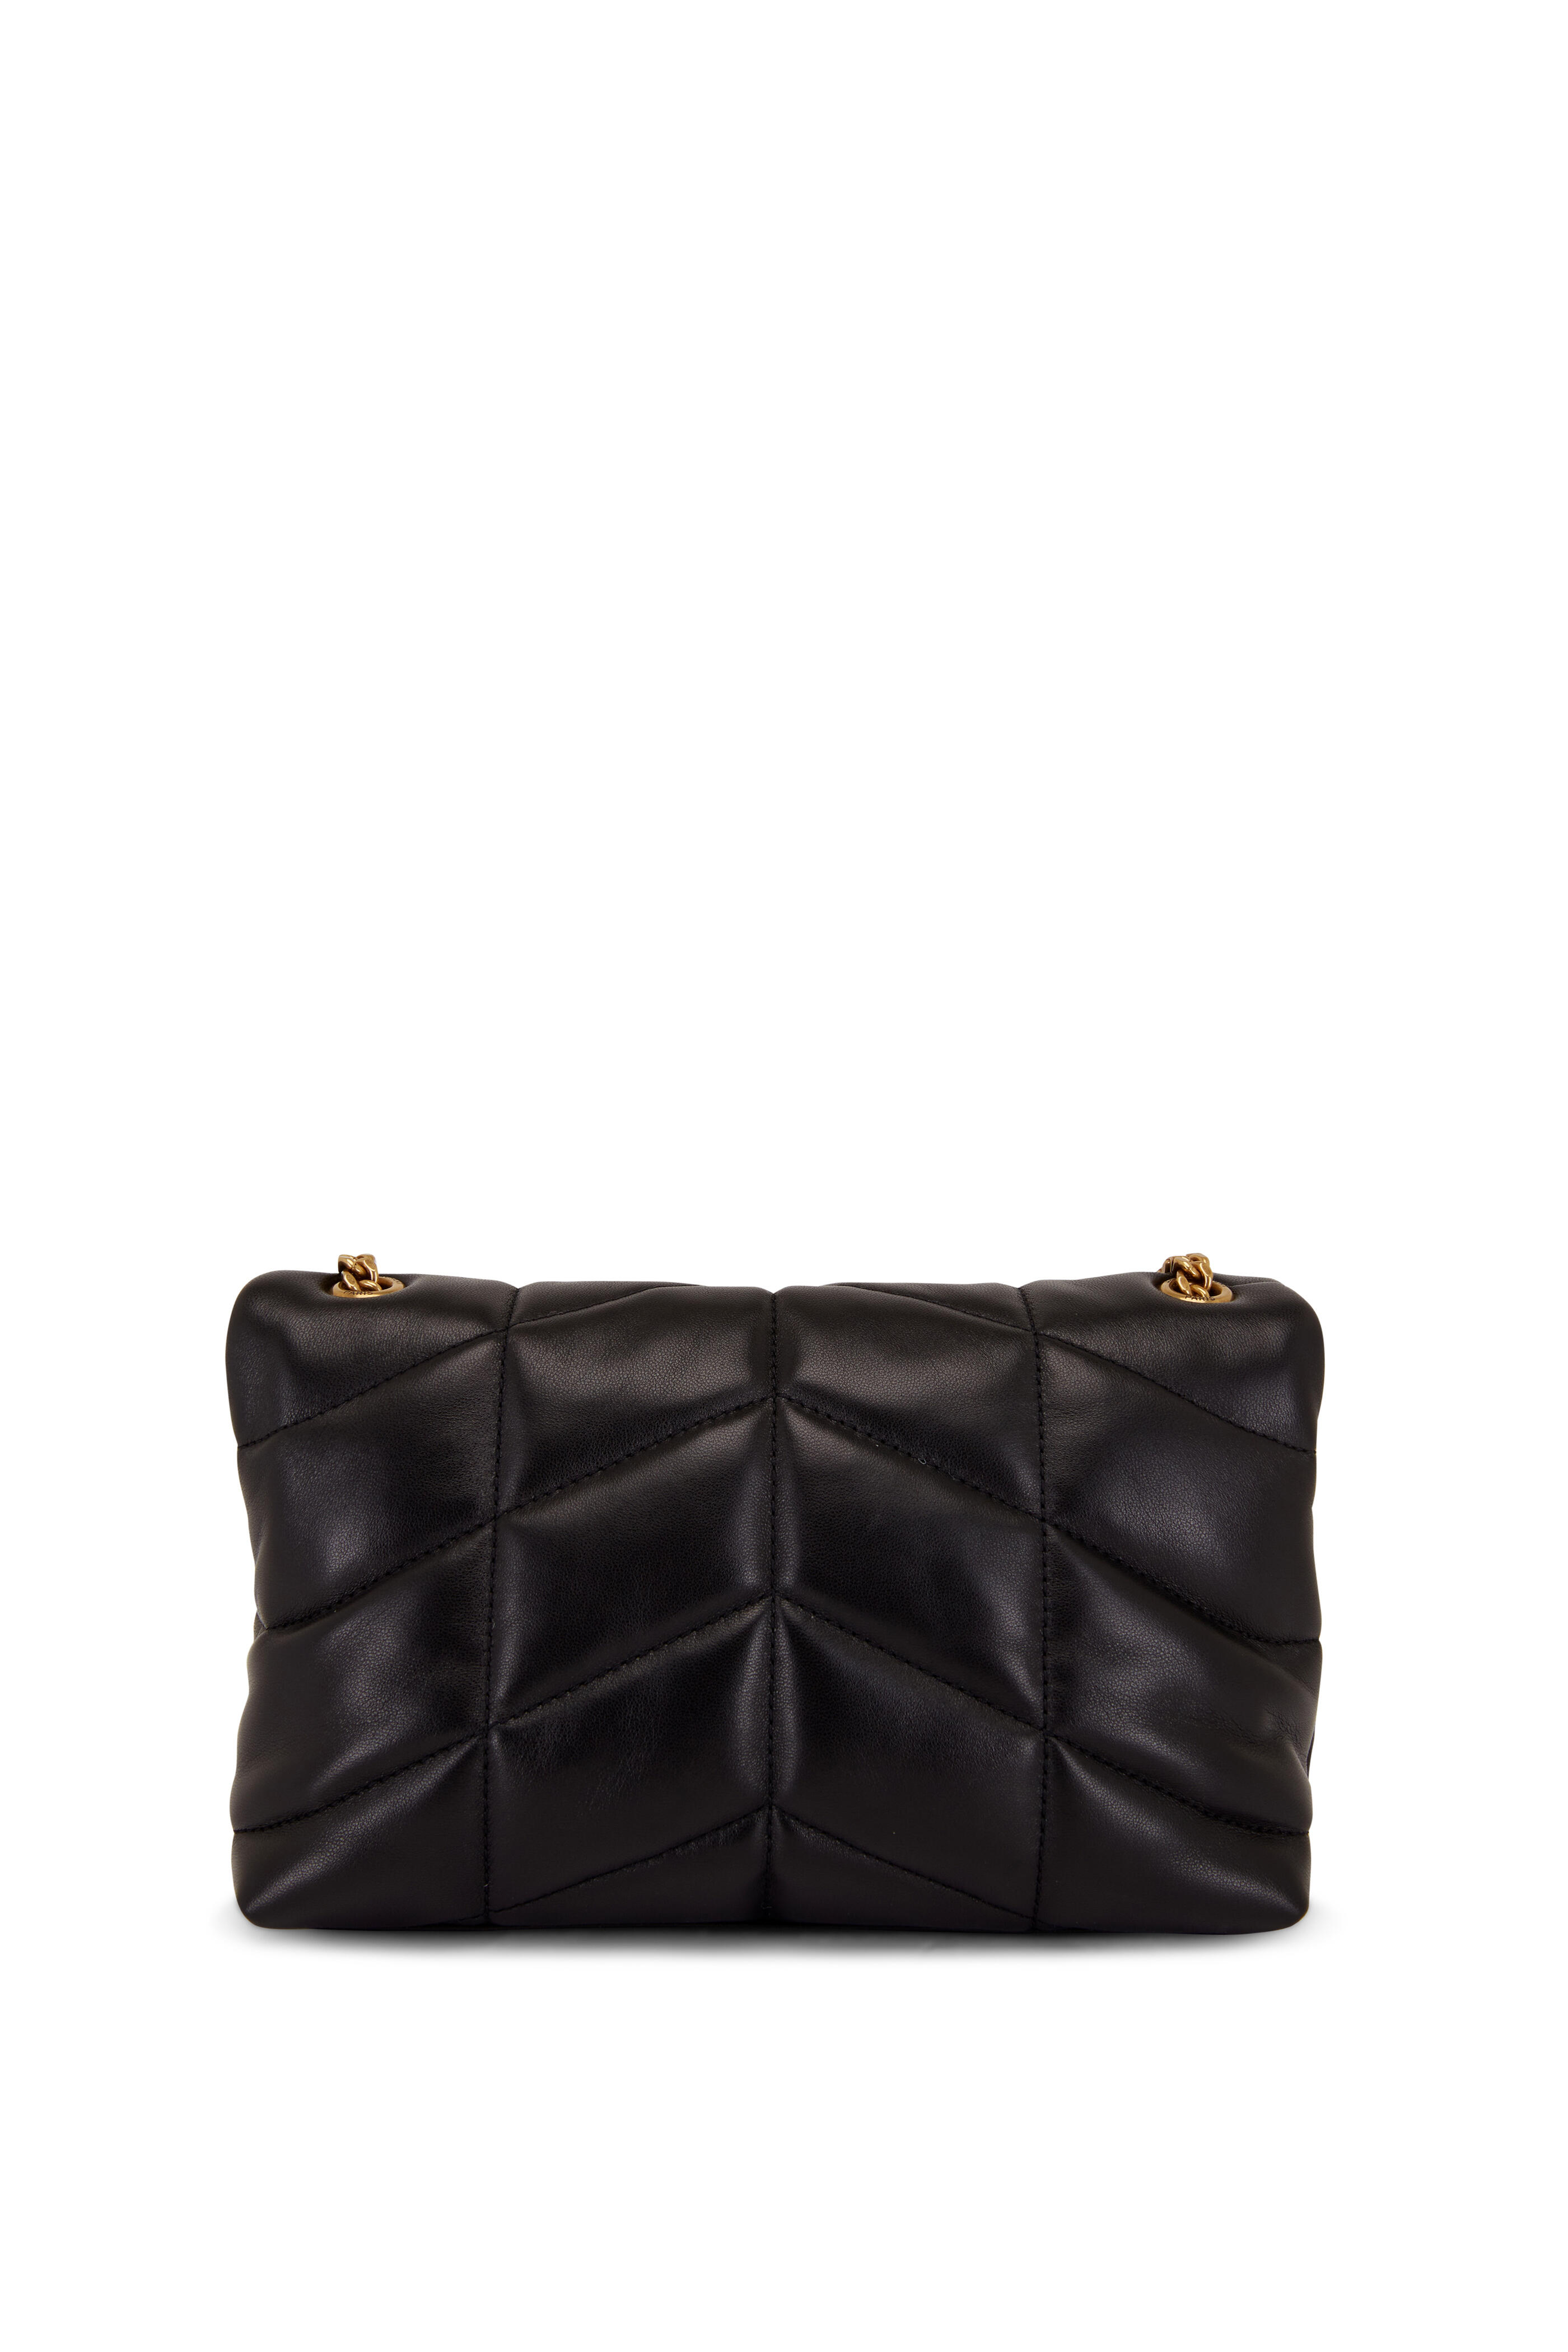 Saint Laurent quilted leather clutch bag - Black